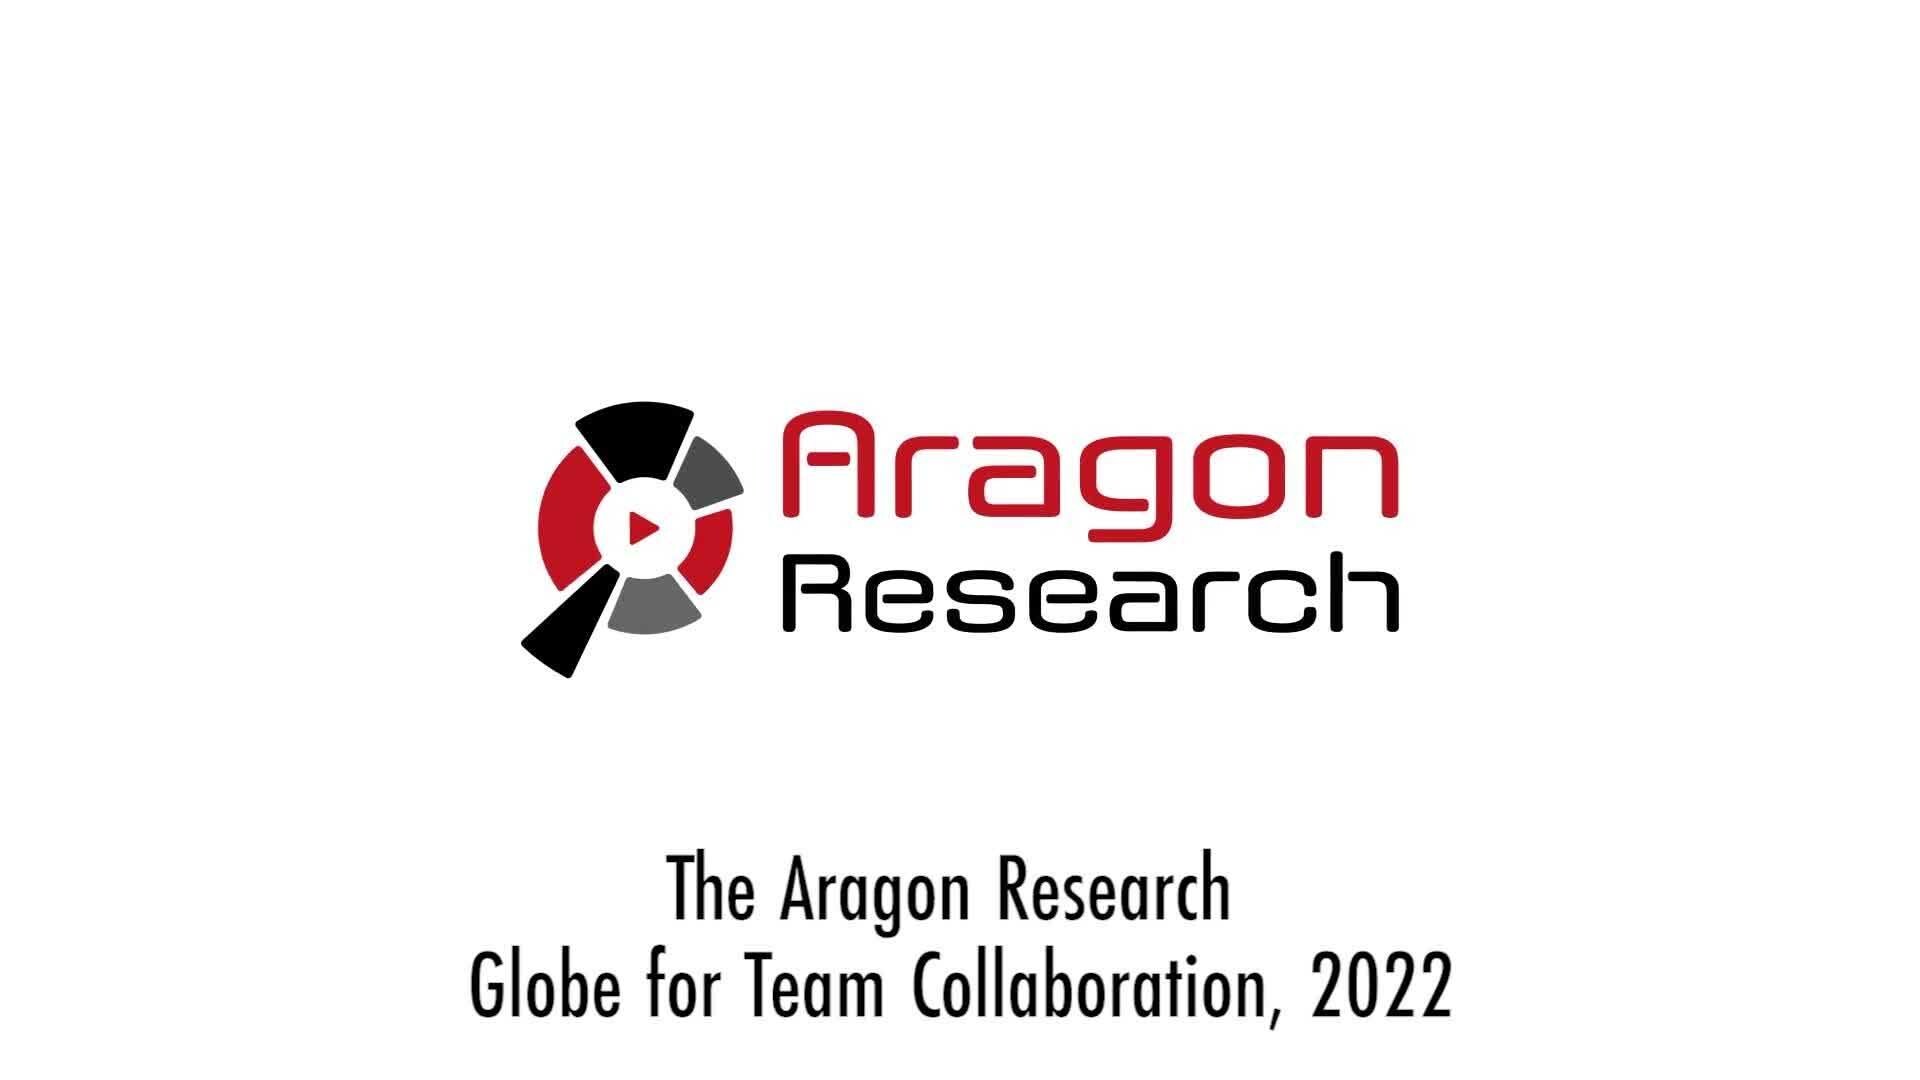 2022 Aragon Research Team Collaboration Globe report